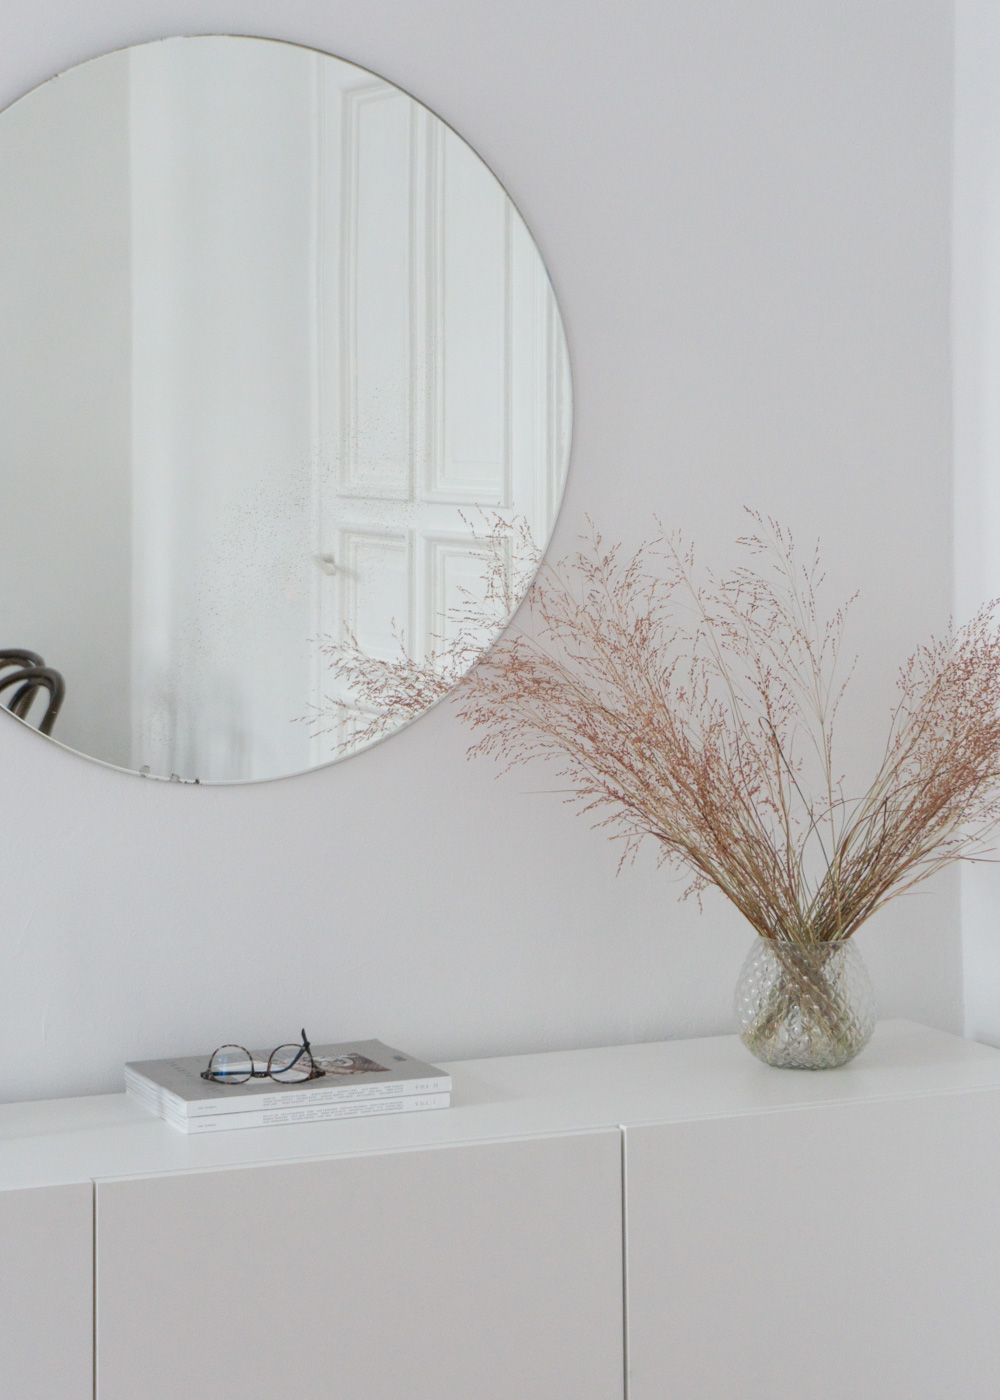 Round Mirror, Dried Flowers - Neutral Home, Scandinavian Aesthetic, Berlin Apartment, White Interior, Calm Lighting | RG Daily Blog